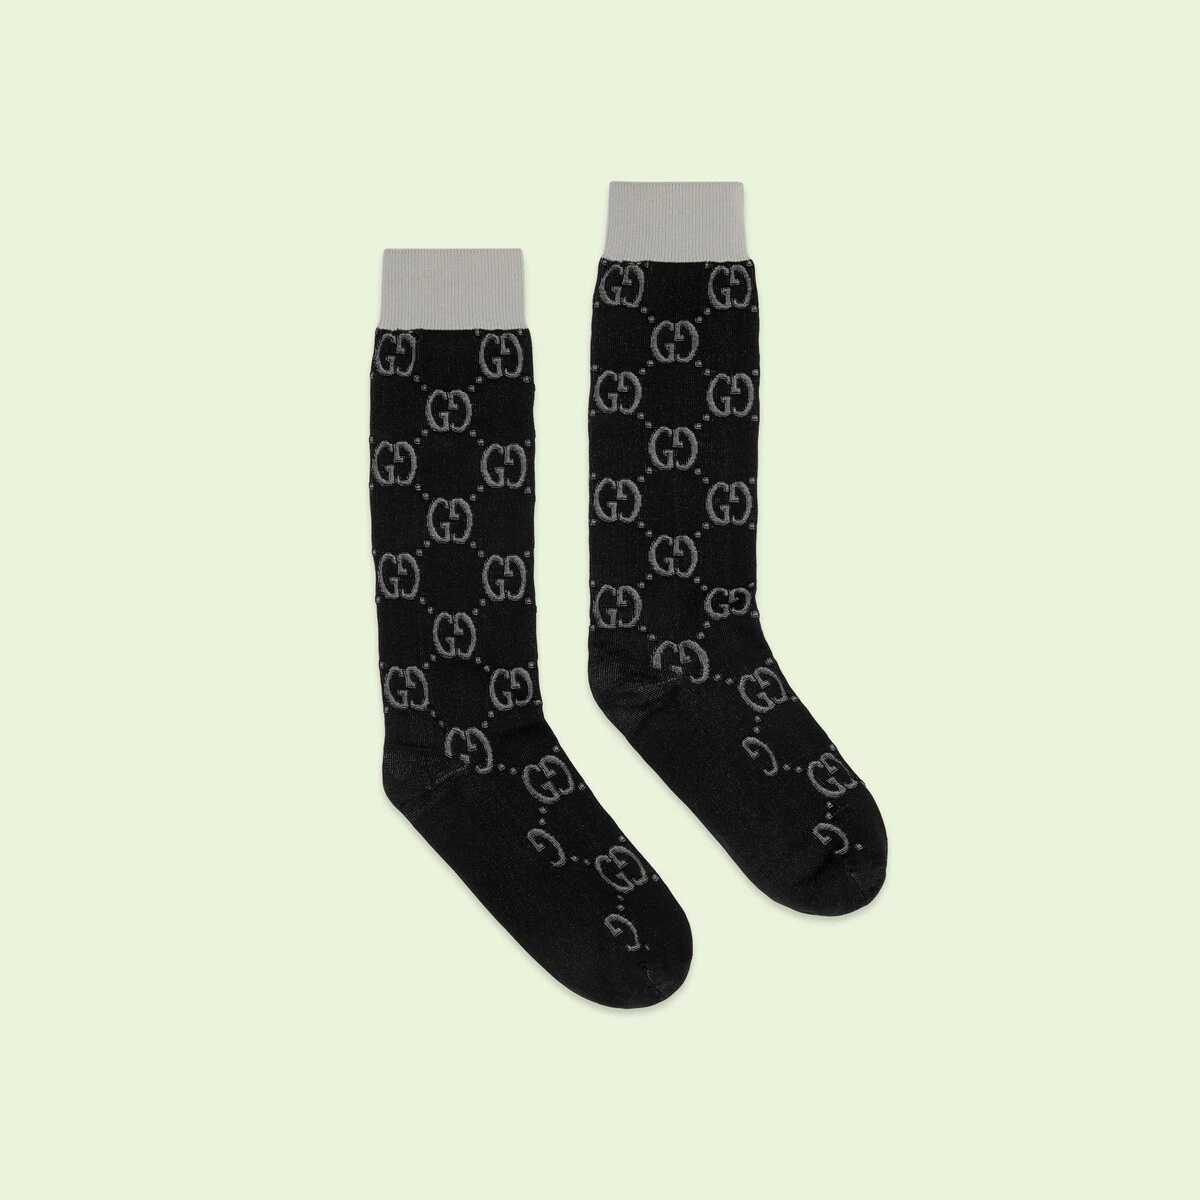 GG knit socks - 2